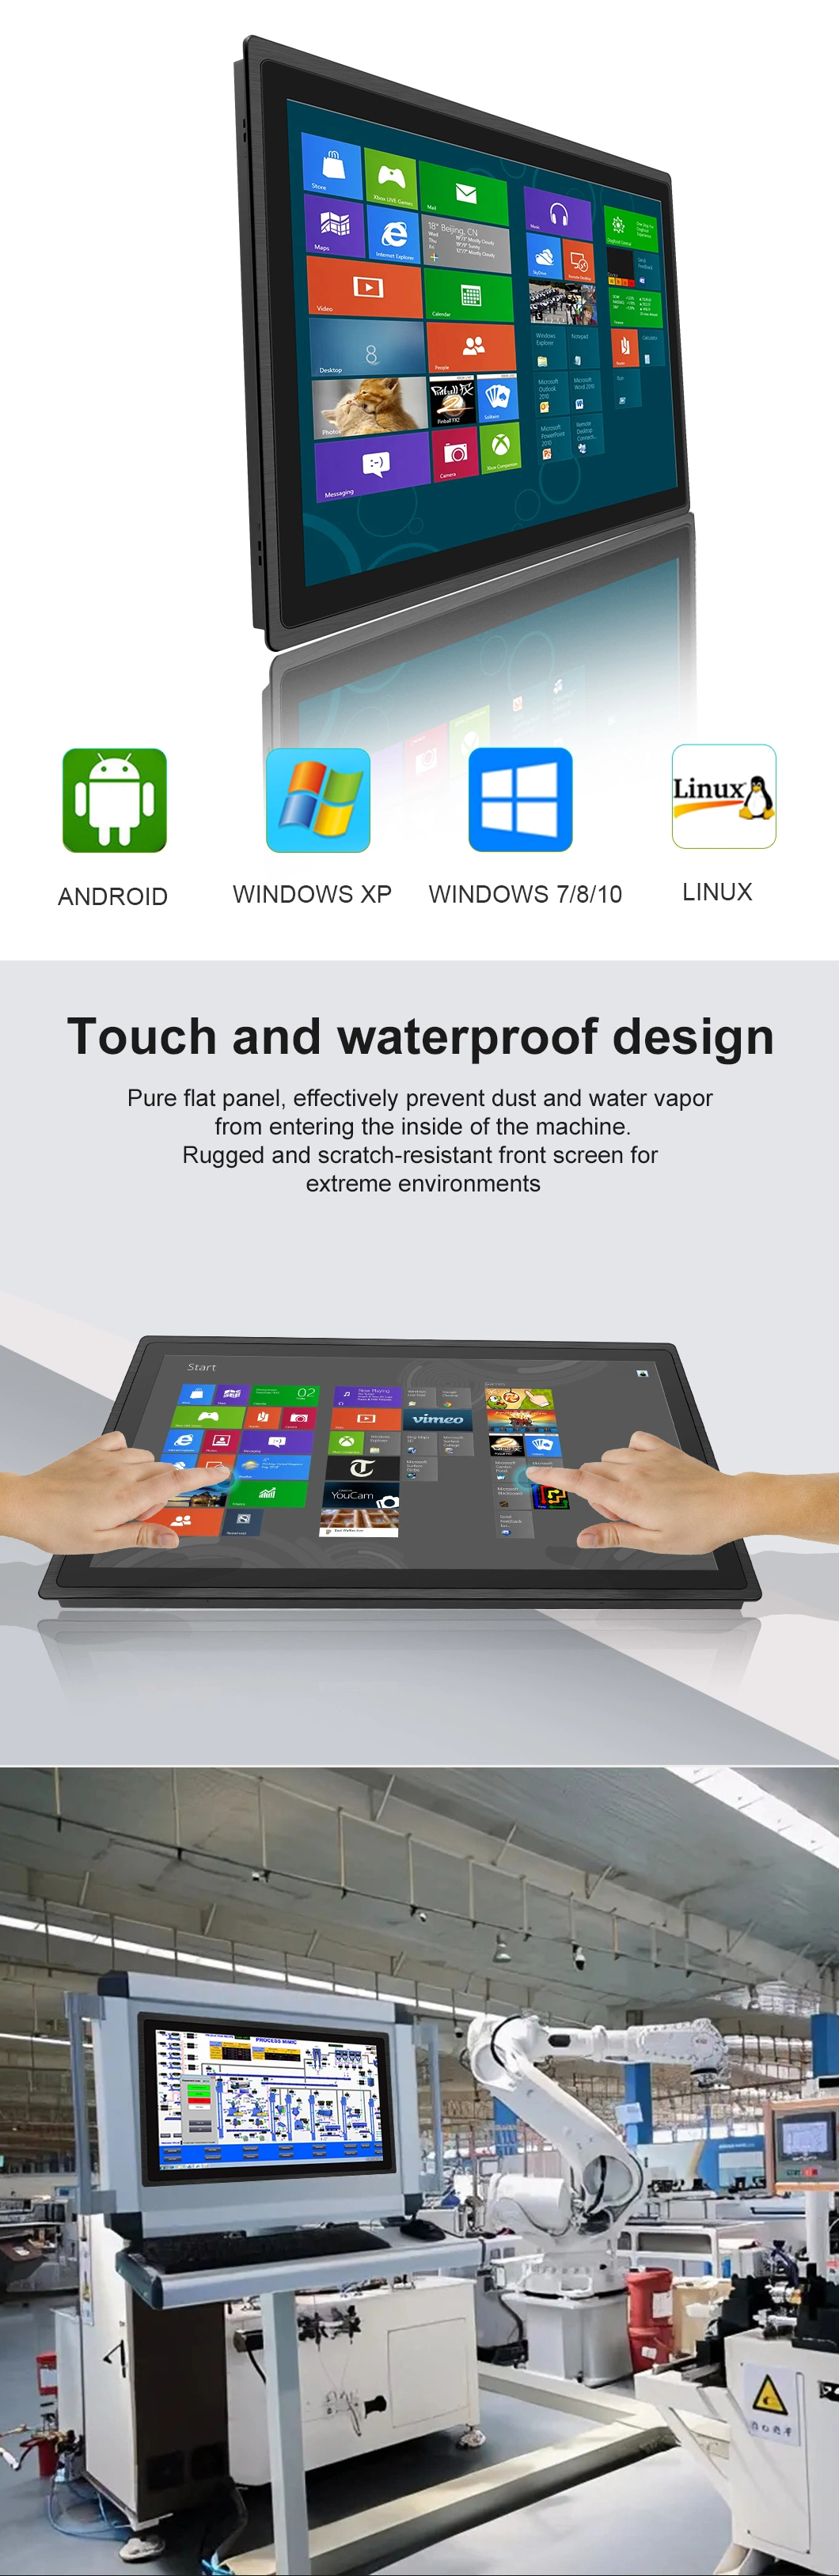 23.6 Inch Waterproof IP65 Touchscreen Display X86 All in One PC Desktop Computer Industrial Monitor with Aluminum Bezel